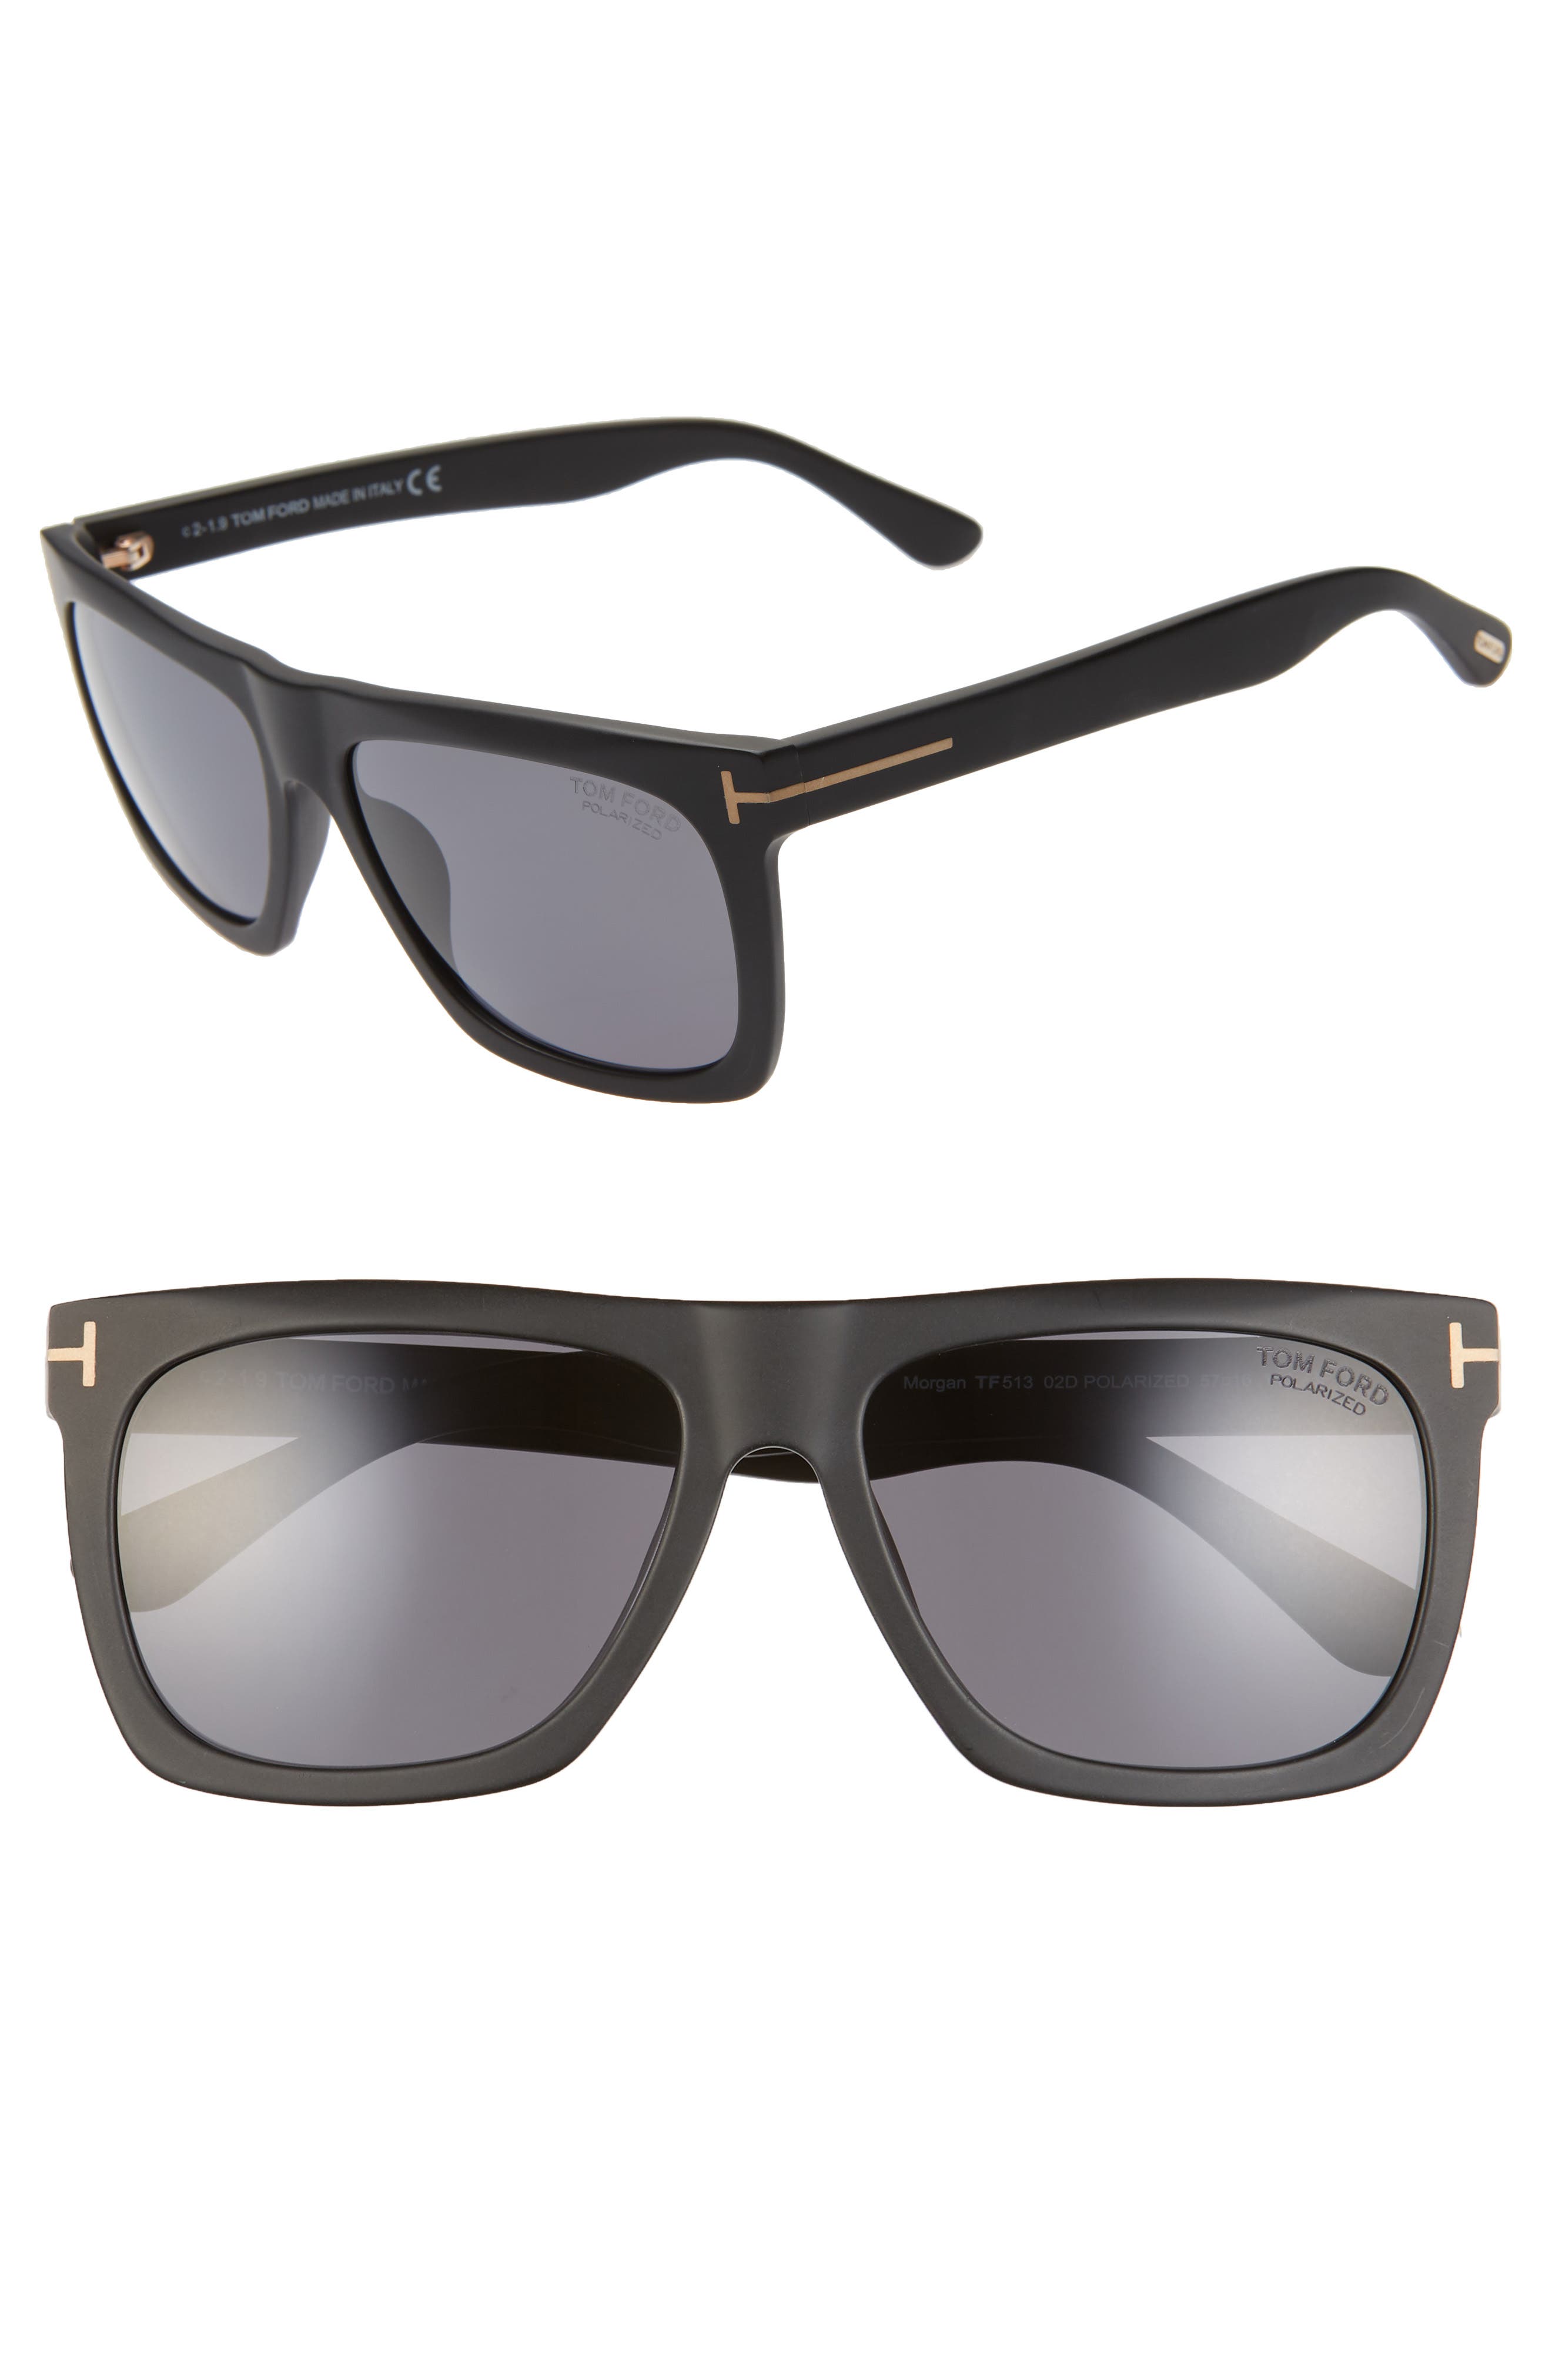 Polarized Sunglasses Men And Women Tom Design Sunglasses Men 